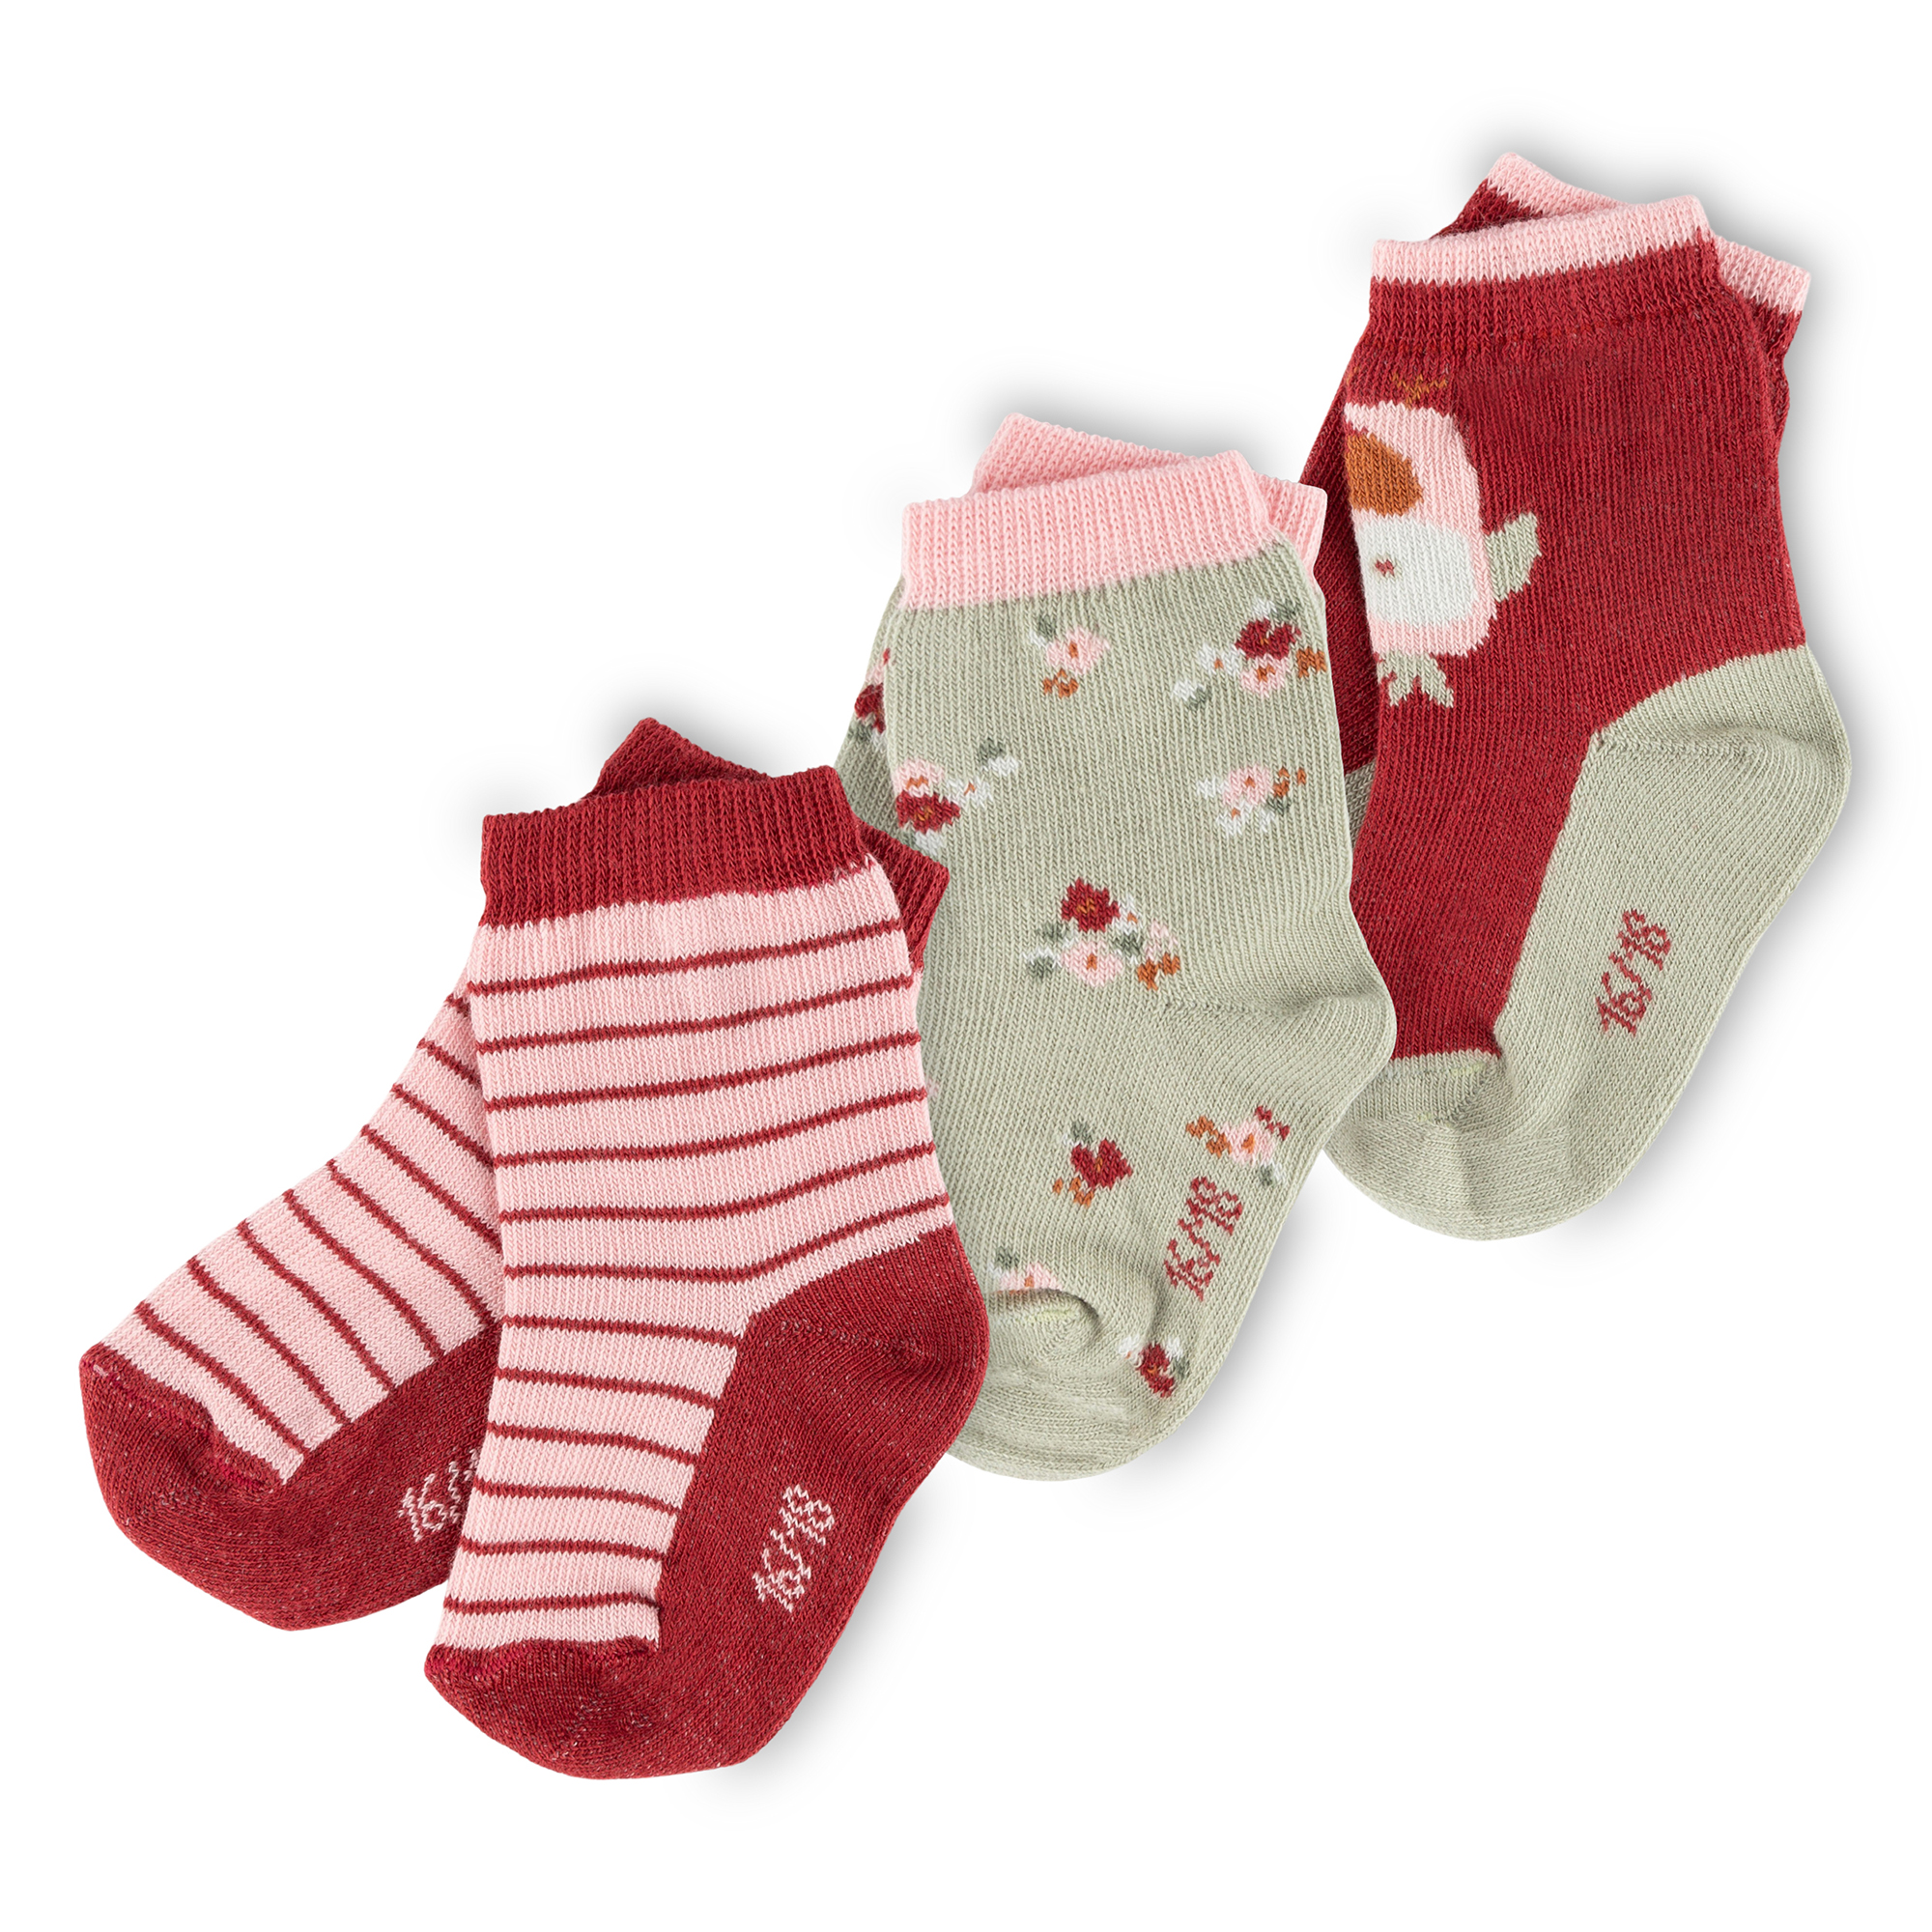 Baby 3er Socken-Set, rosa und dunkelrot